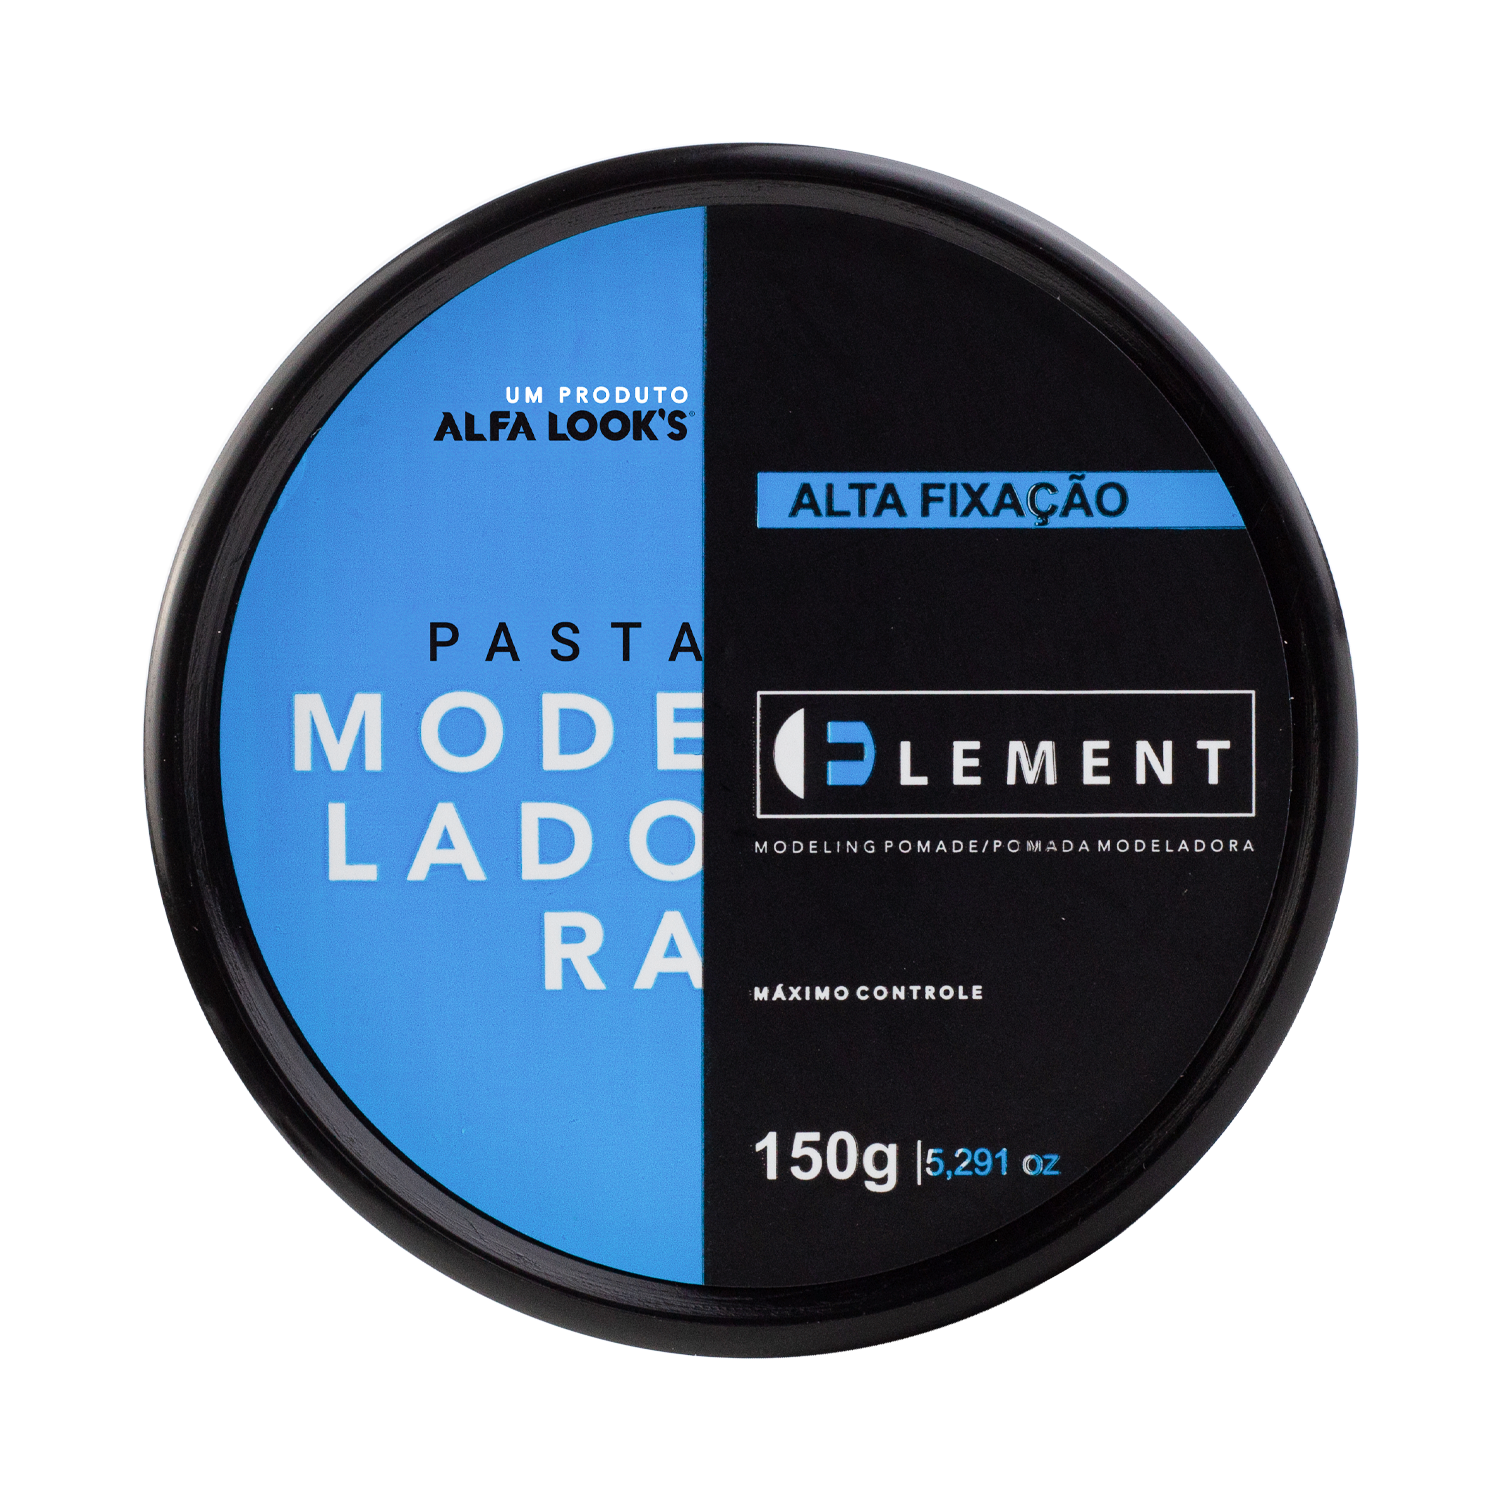 PASTA MODELADORA ELEMENT 150 – ALFA LOOK_S (SUPERIOR)